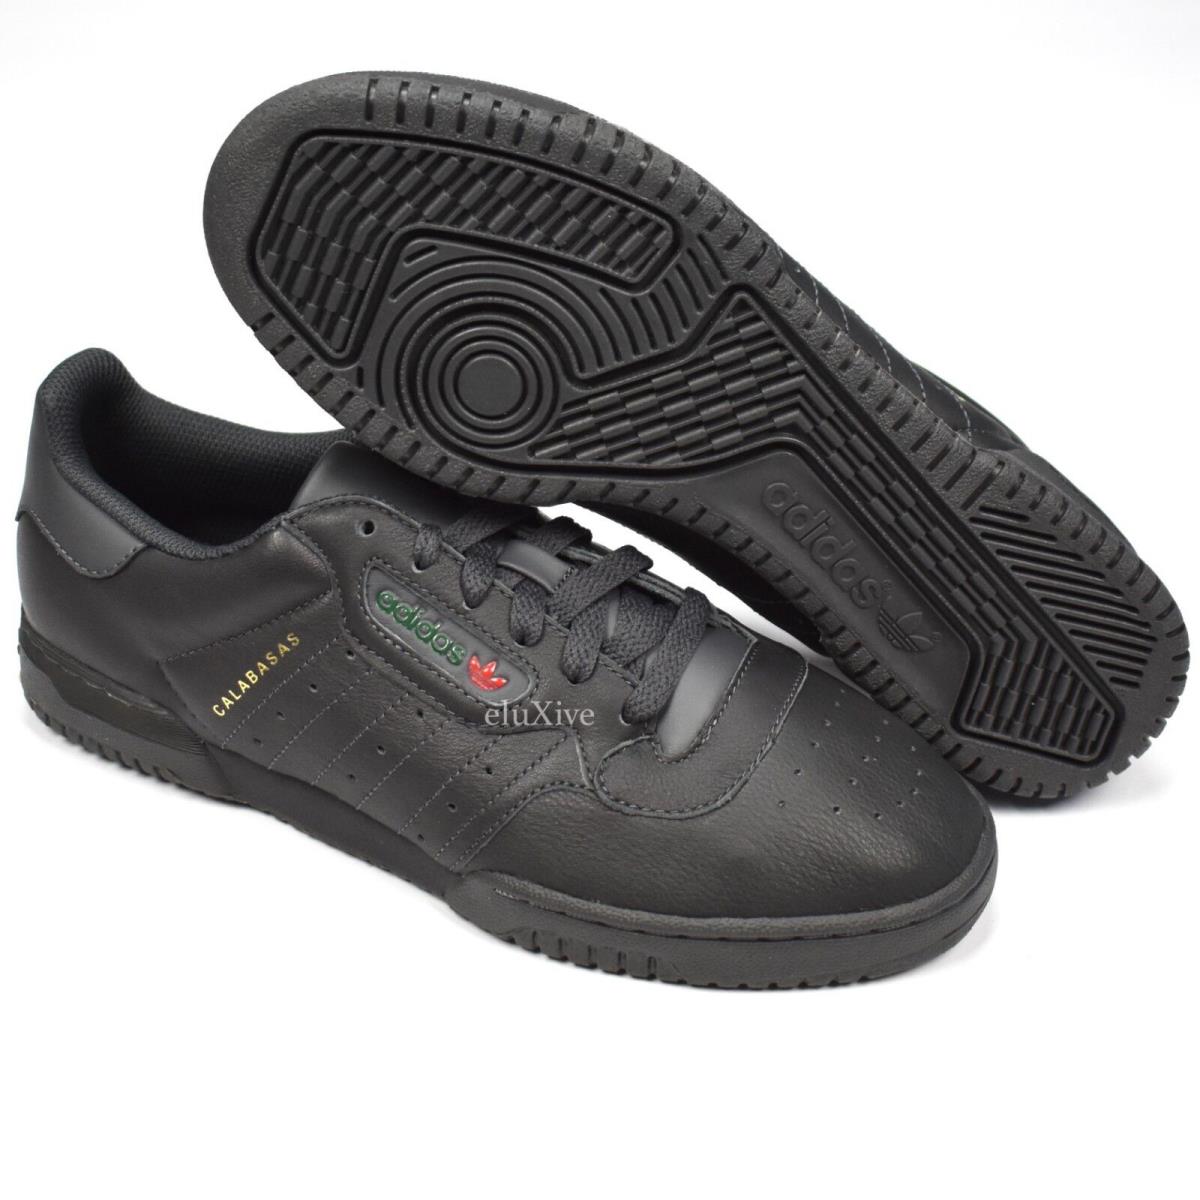 Nido confesar Invertir Adidas Yeezy Powerphase Calabasas Core Black Leather Kanye West DS |  692740655673 - Adidas shoes Yeezy Powerphase - Black | SporTipTop